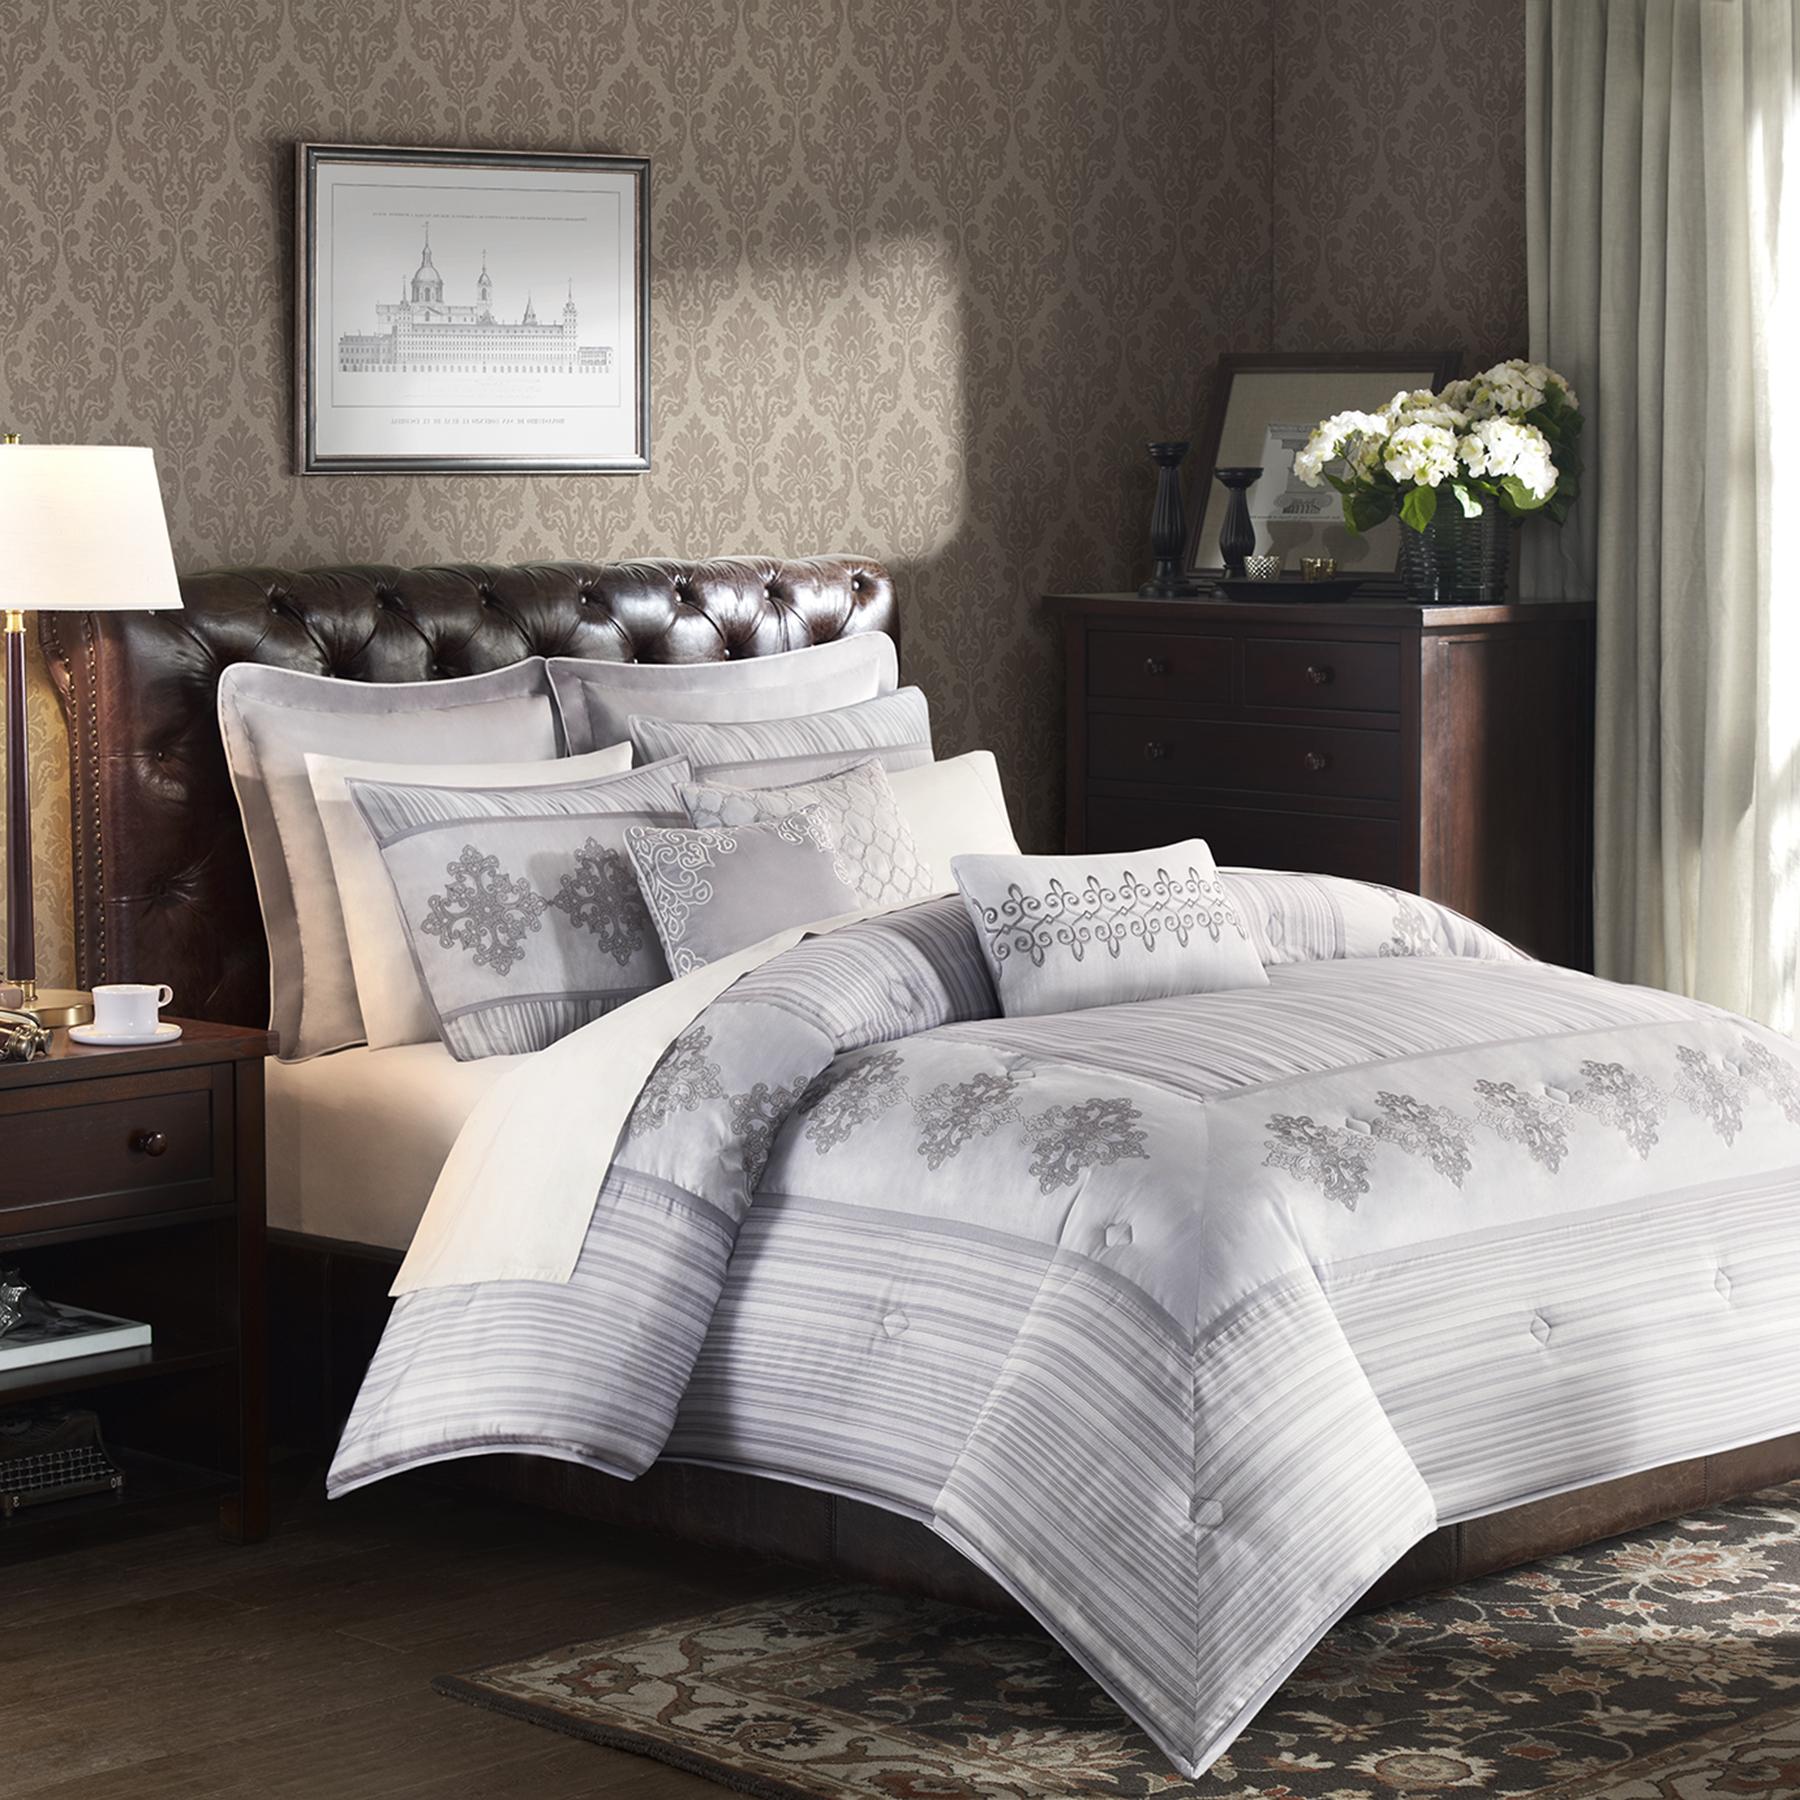 Grand Resort Delphine Comforter Set